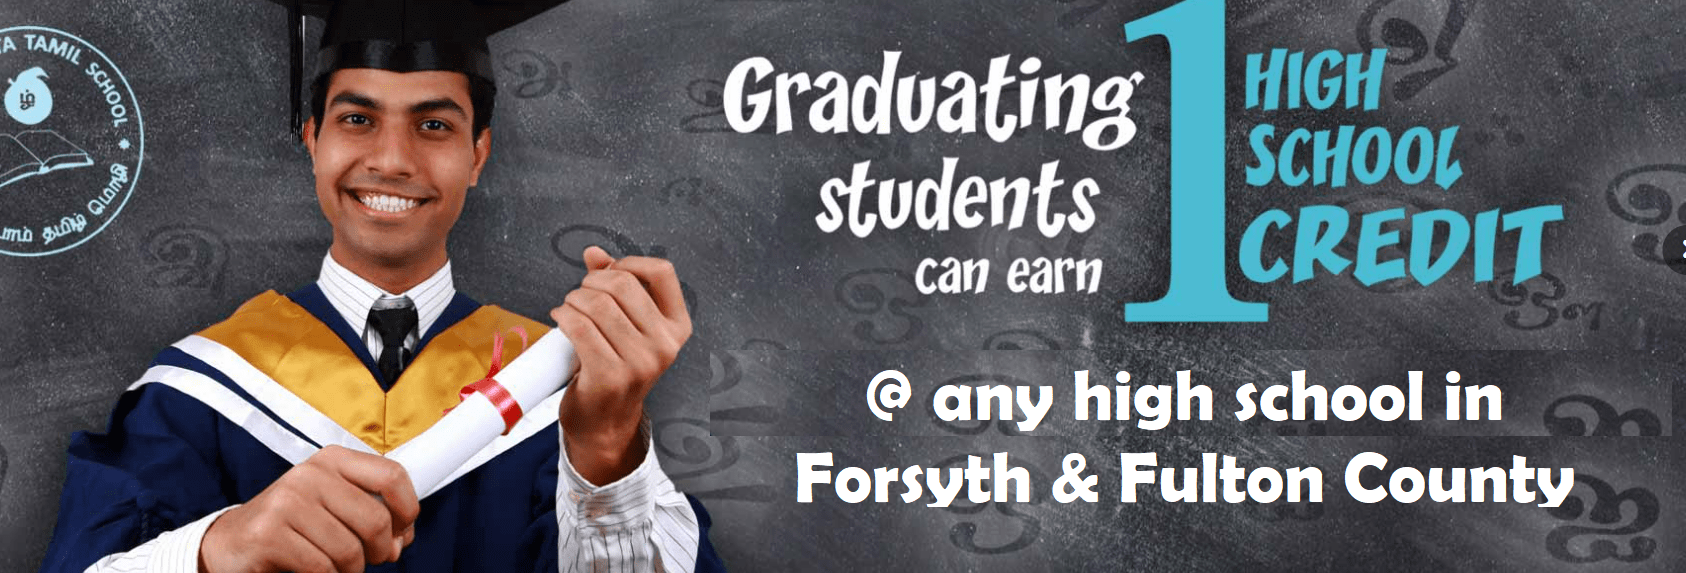 ATS_HighSchool_Credit_Forsyth_Fulton_2022